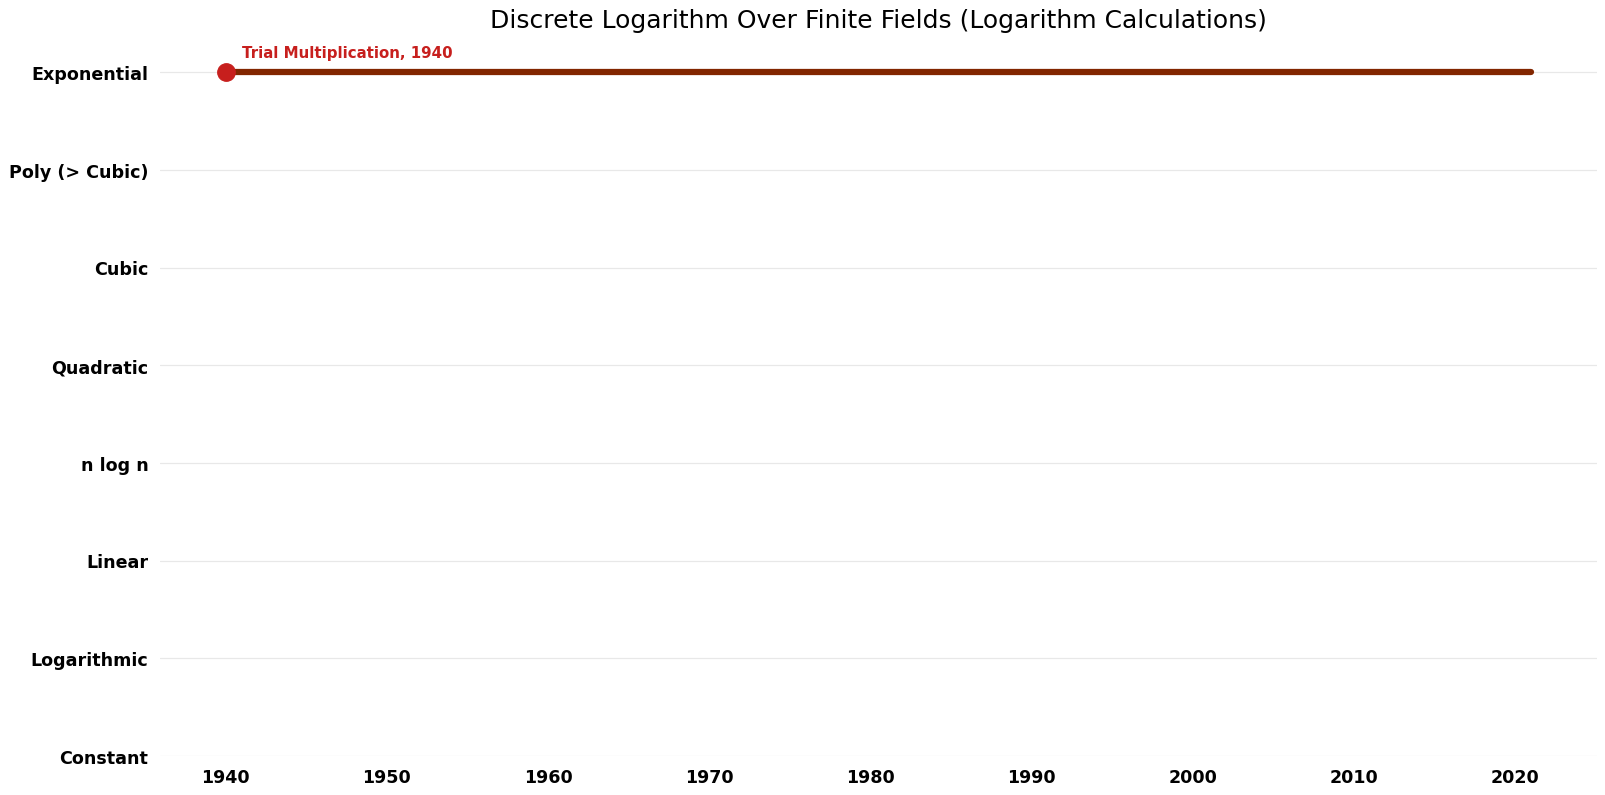 File:Logarithm Calculations - Discrete Logarithm Over Finite Fields - Time.png